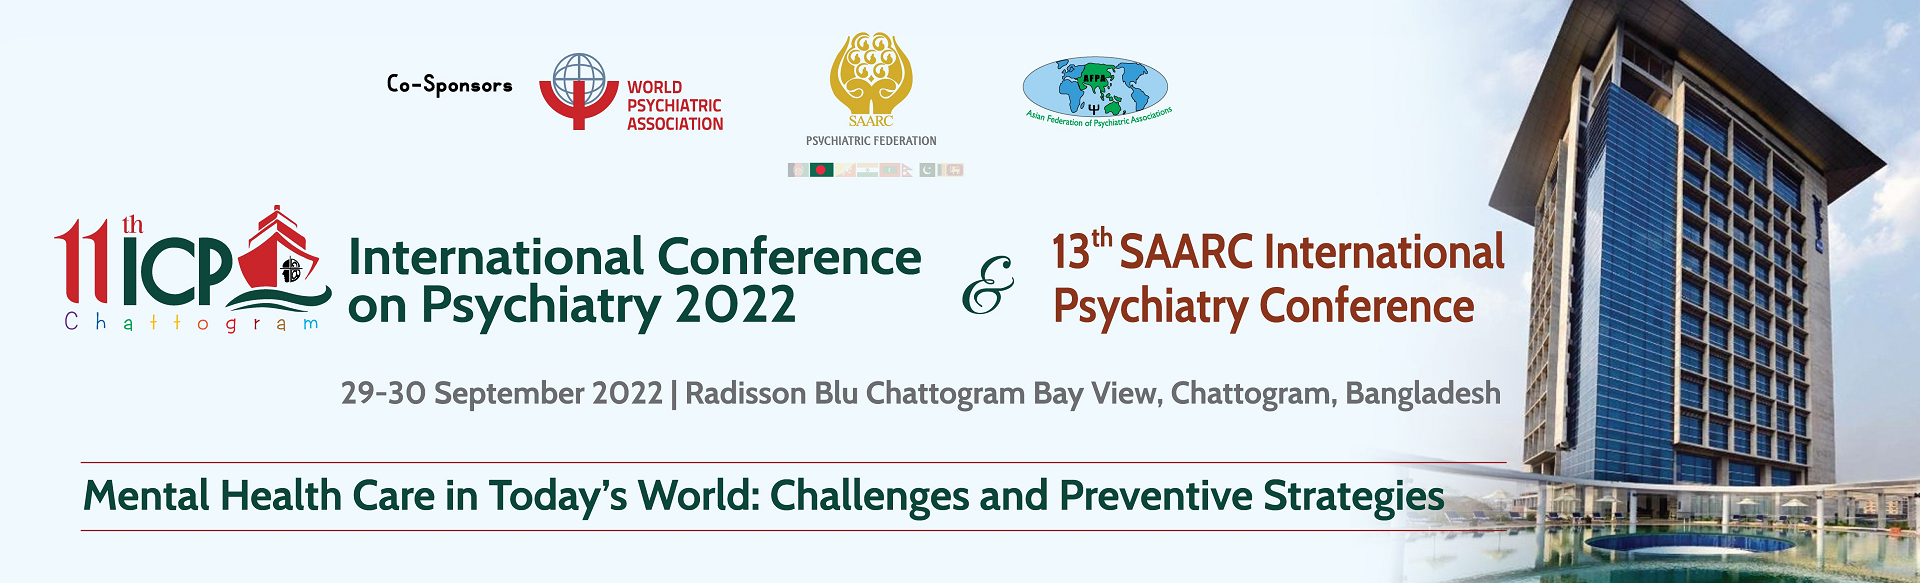 International Conference on Psychiatry